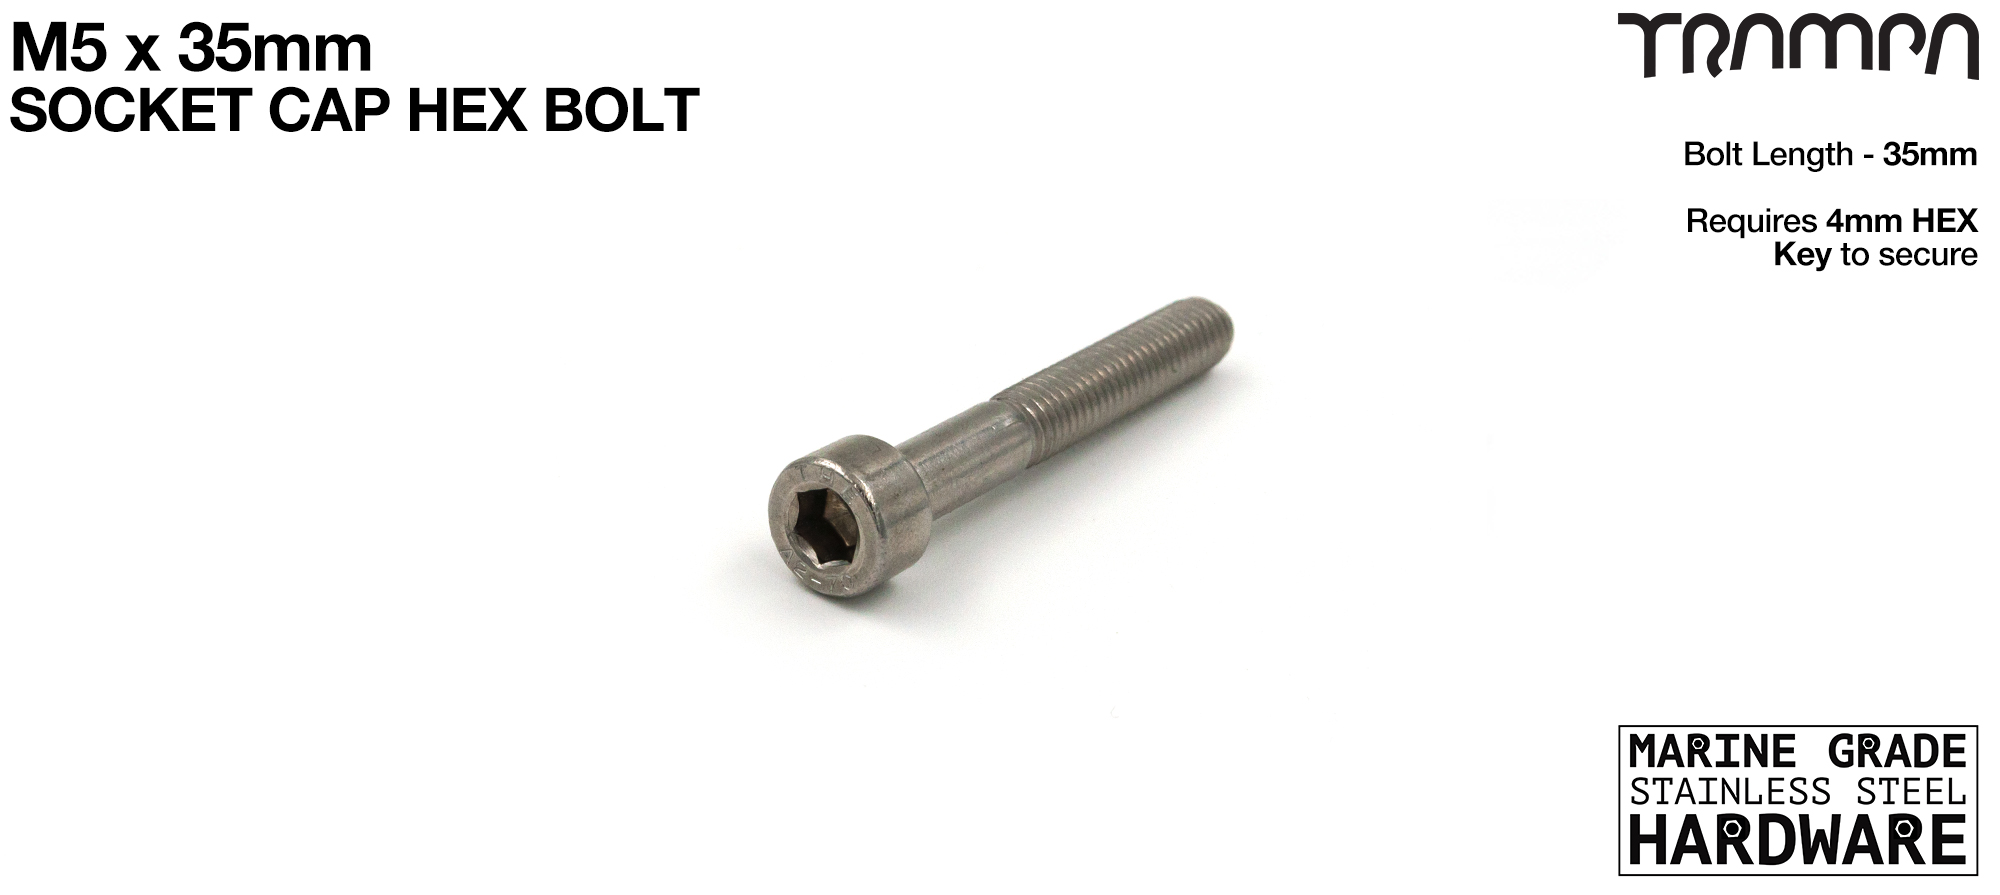 M5 x 35mm Socket Capped Head Allen-Key Bolt ISO 4762 Marine Grade Stainless Steel 